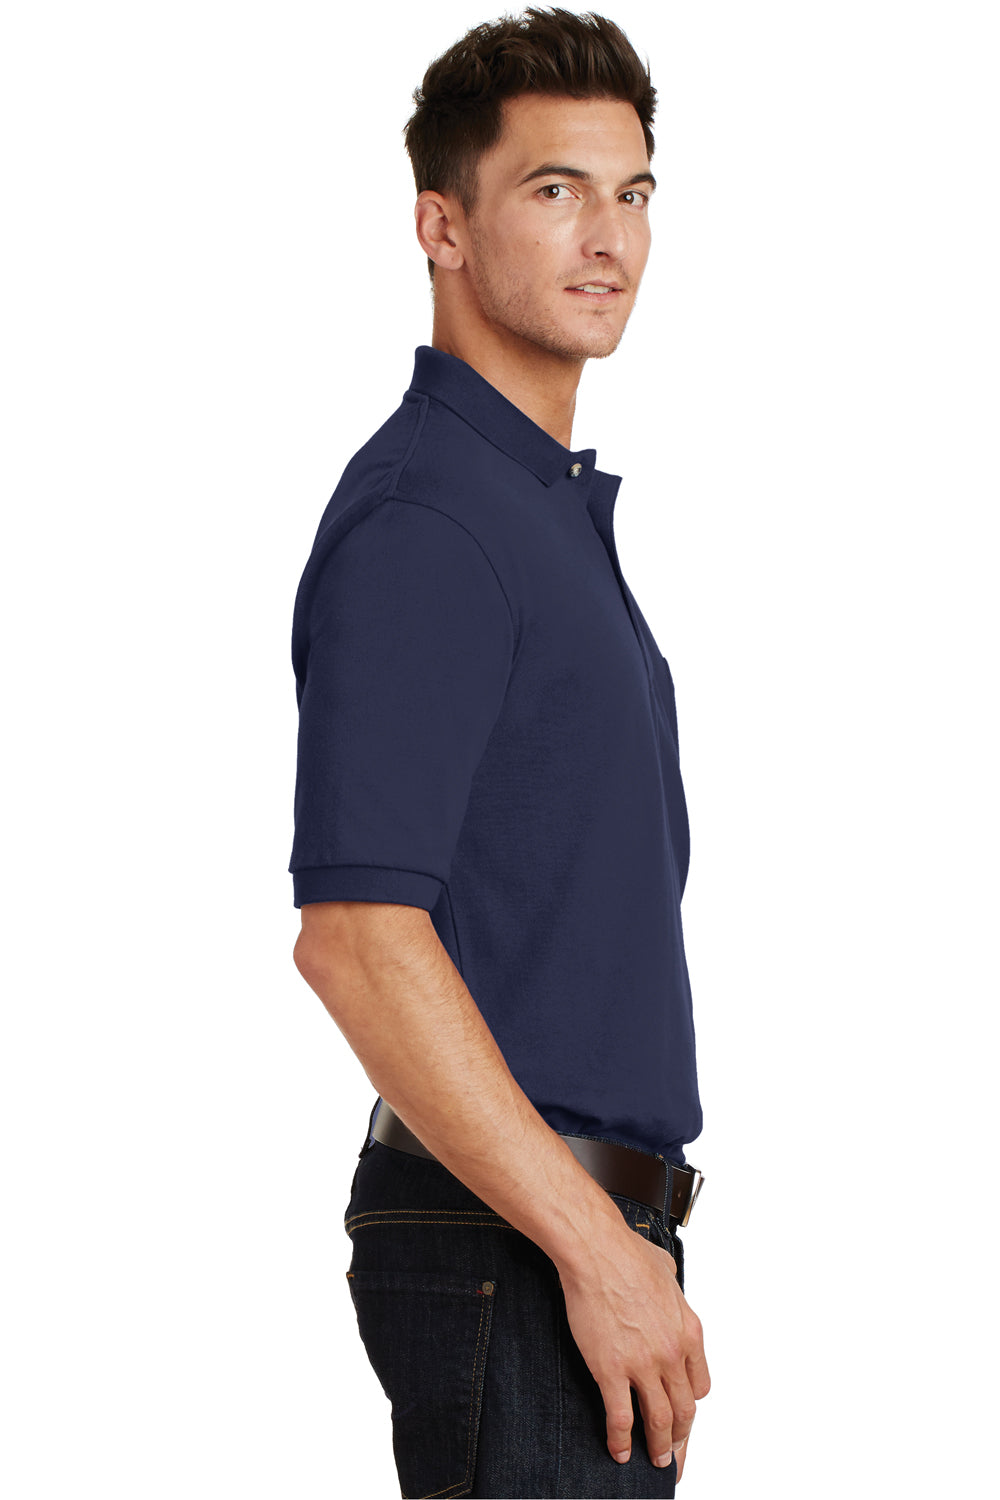 Port Authority K420P Mens Short Sleeve Polo Shirt w/ Pocket Navy Blue Side